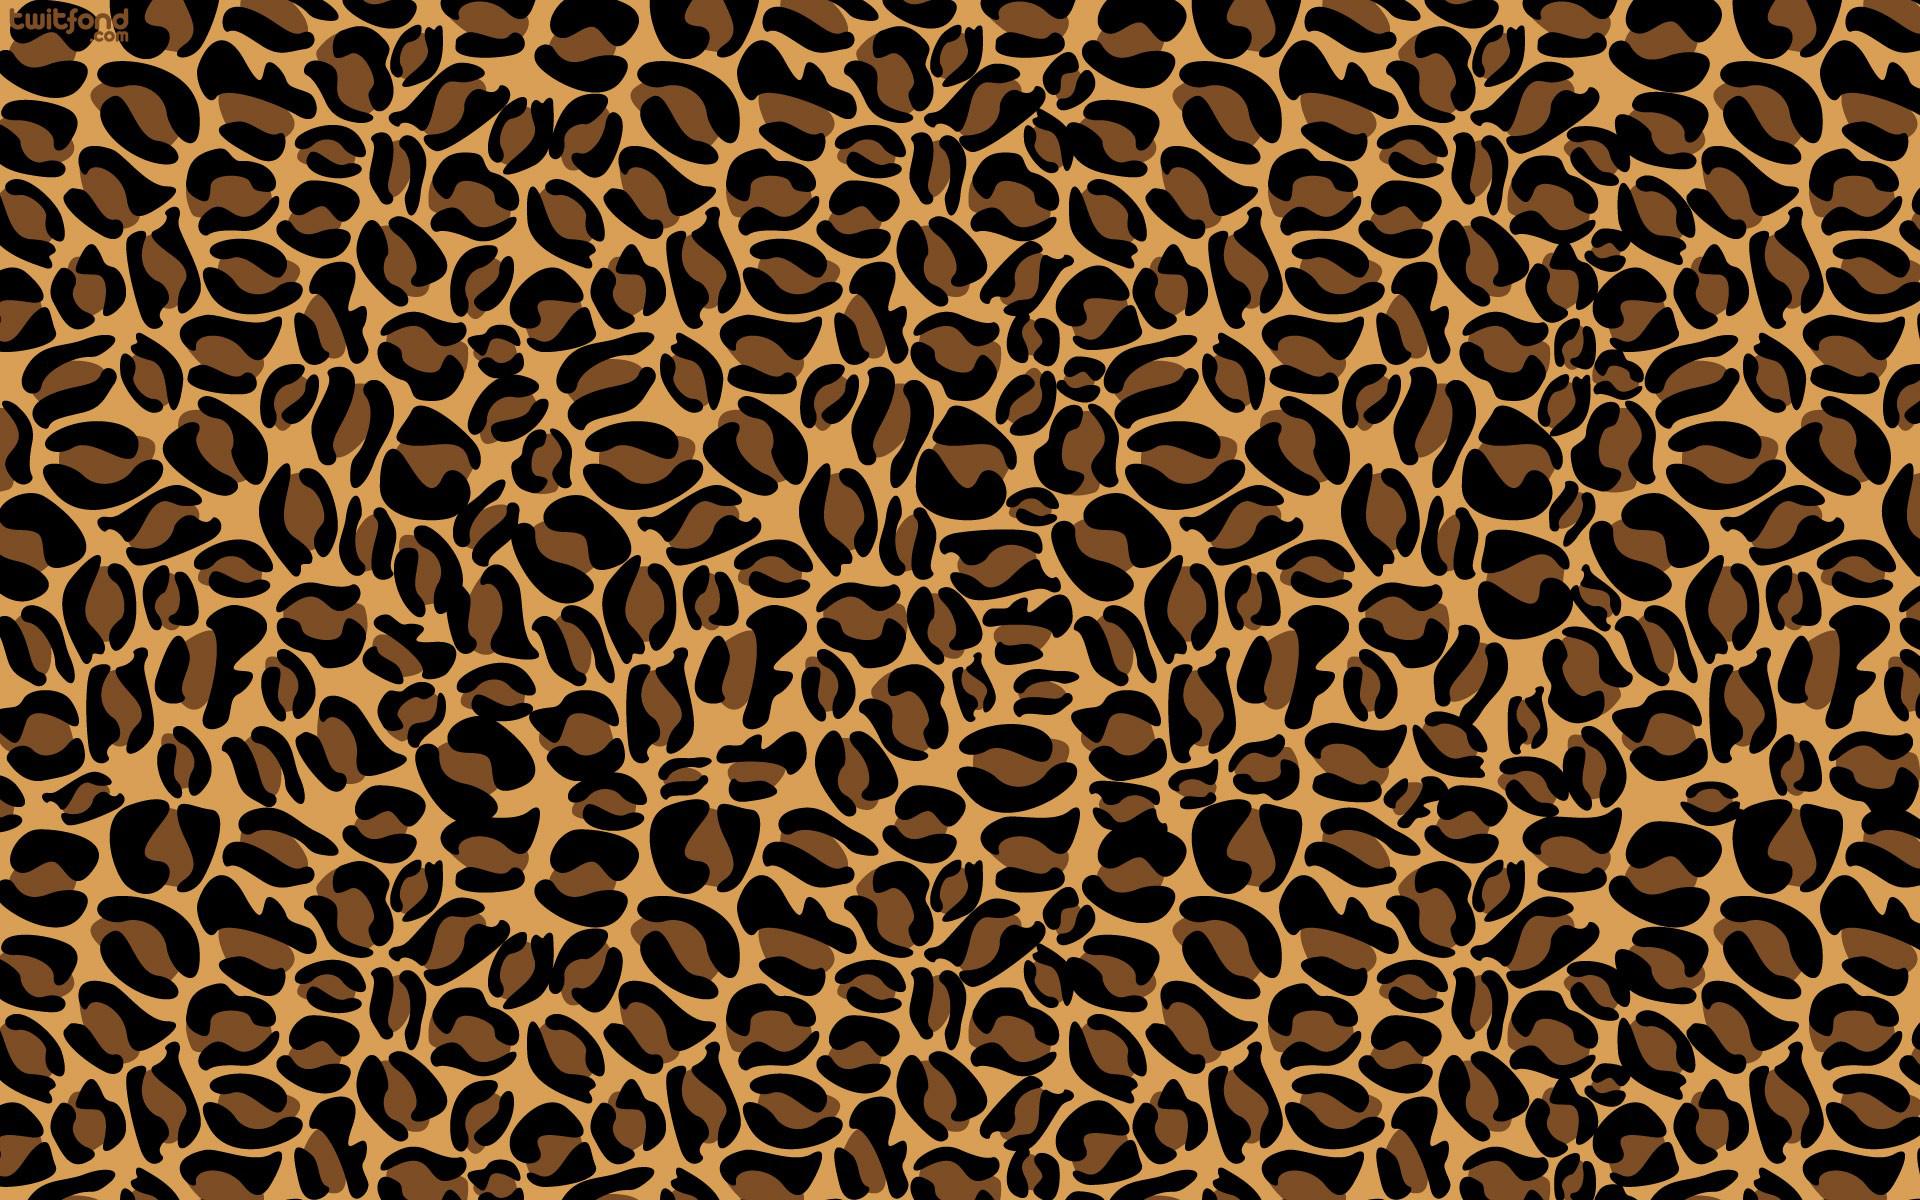 Wallpaper.wiki Cheetah Print Image Cool Download PIC WPE0011362